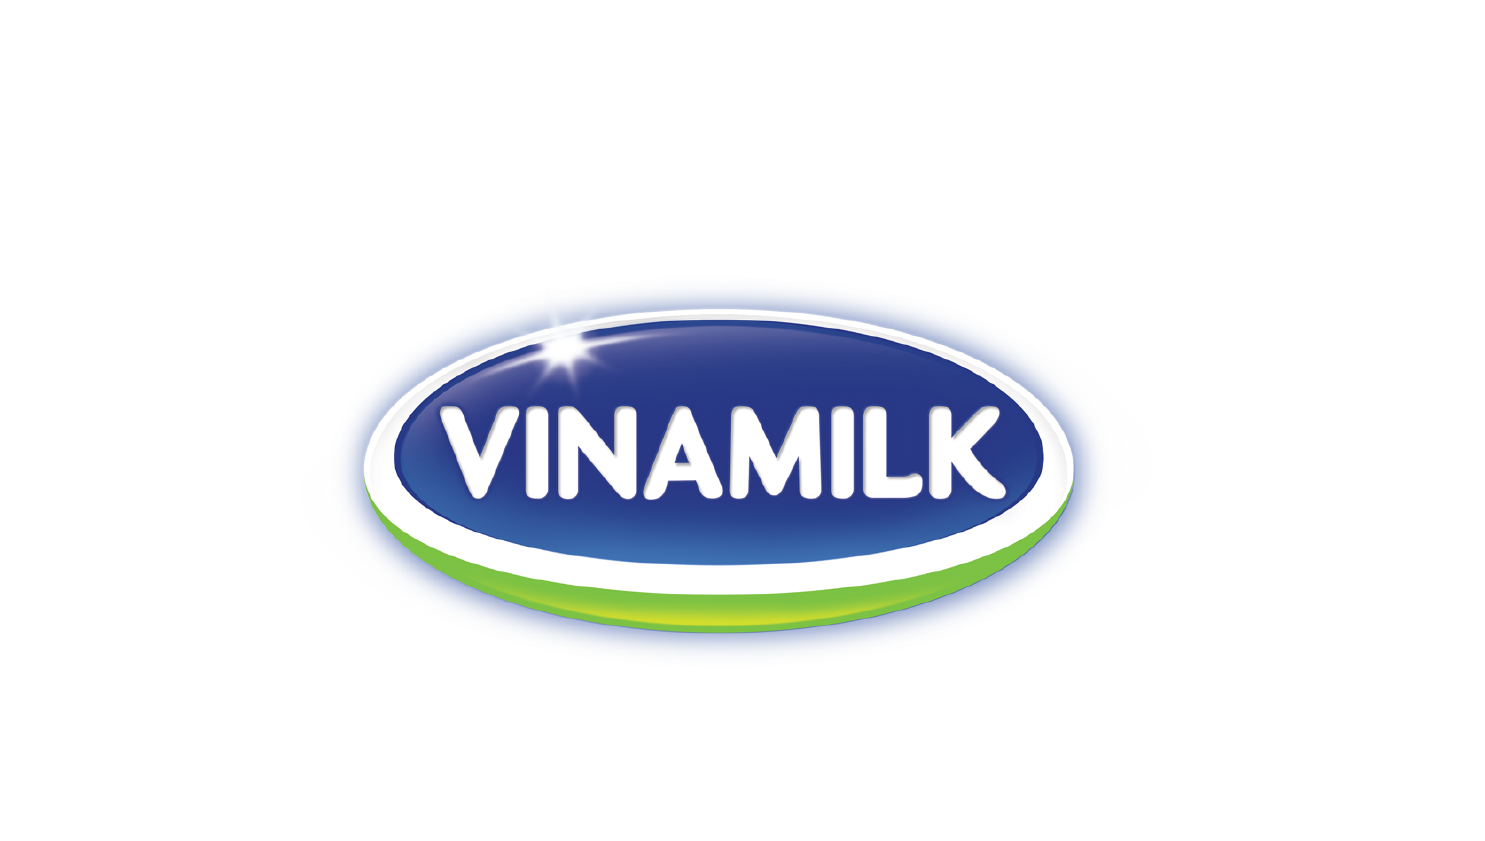 Vinamilk commits to bring you